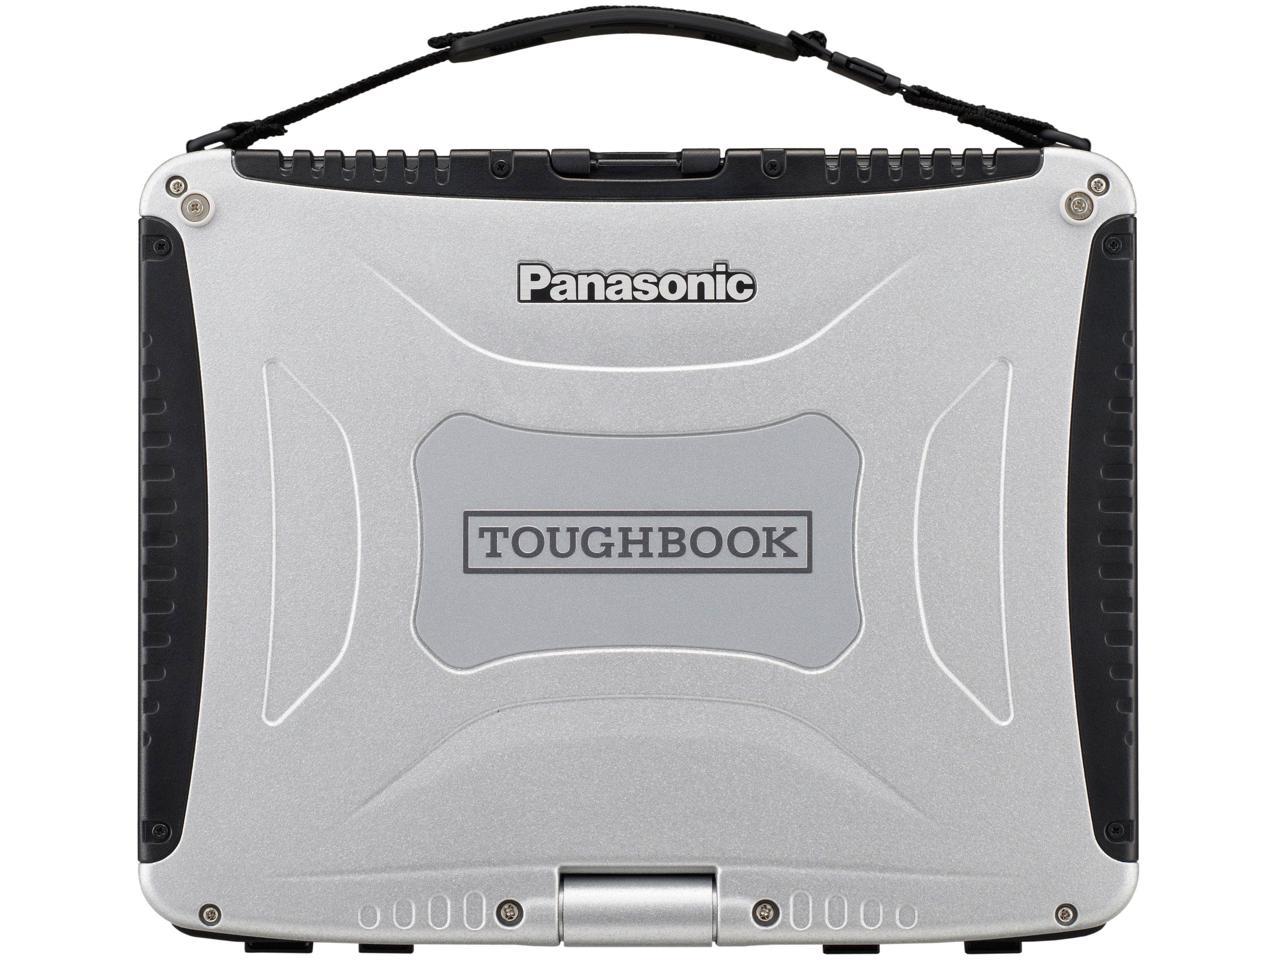 Panasonic Toughbook CF-19 MK4, Intel i5-U540 @1.20GHz, 10.4